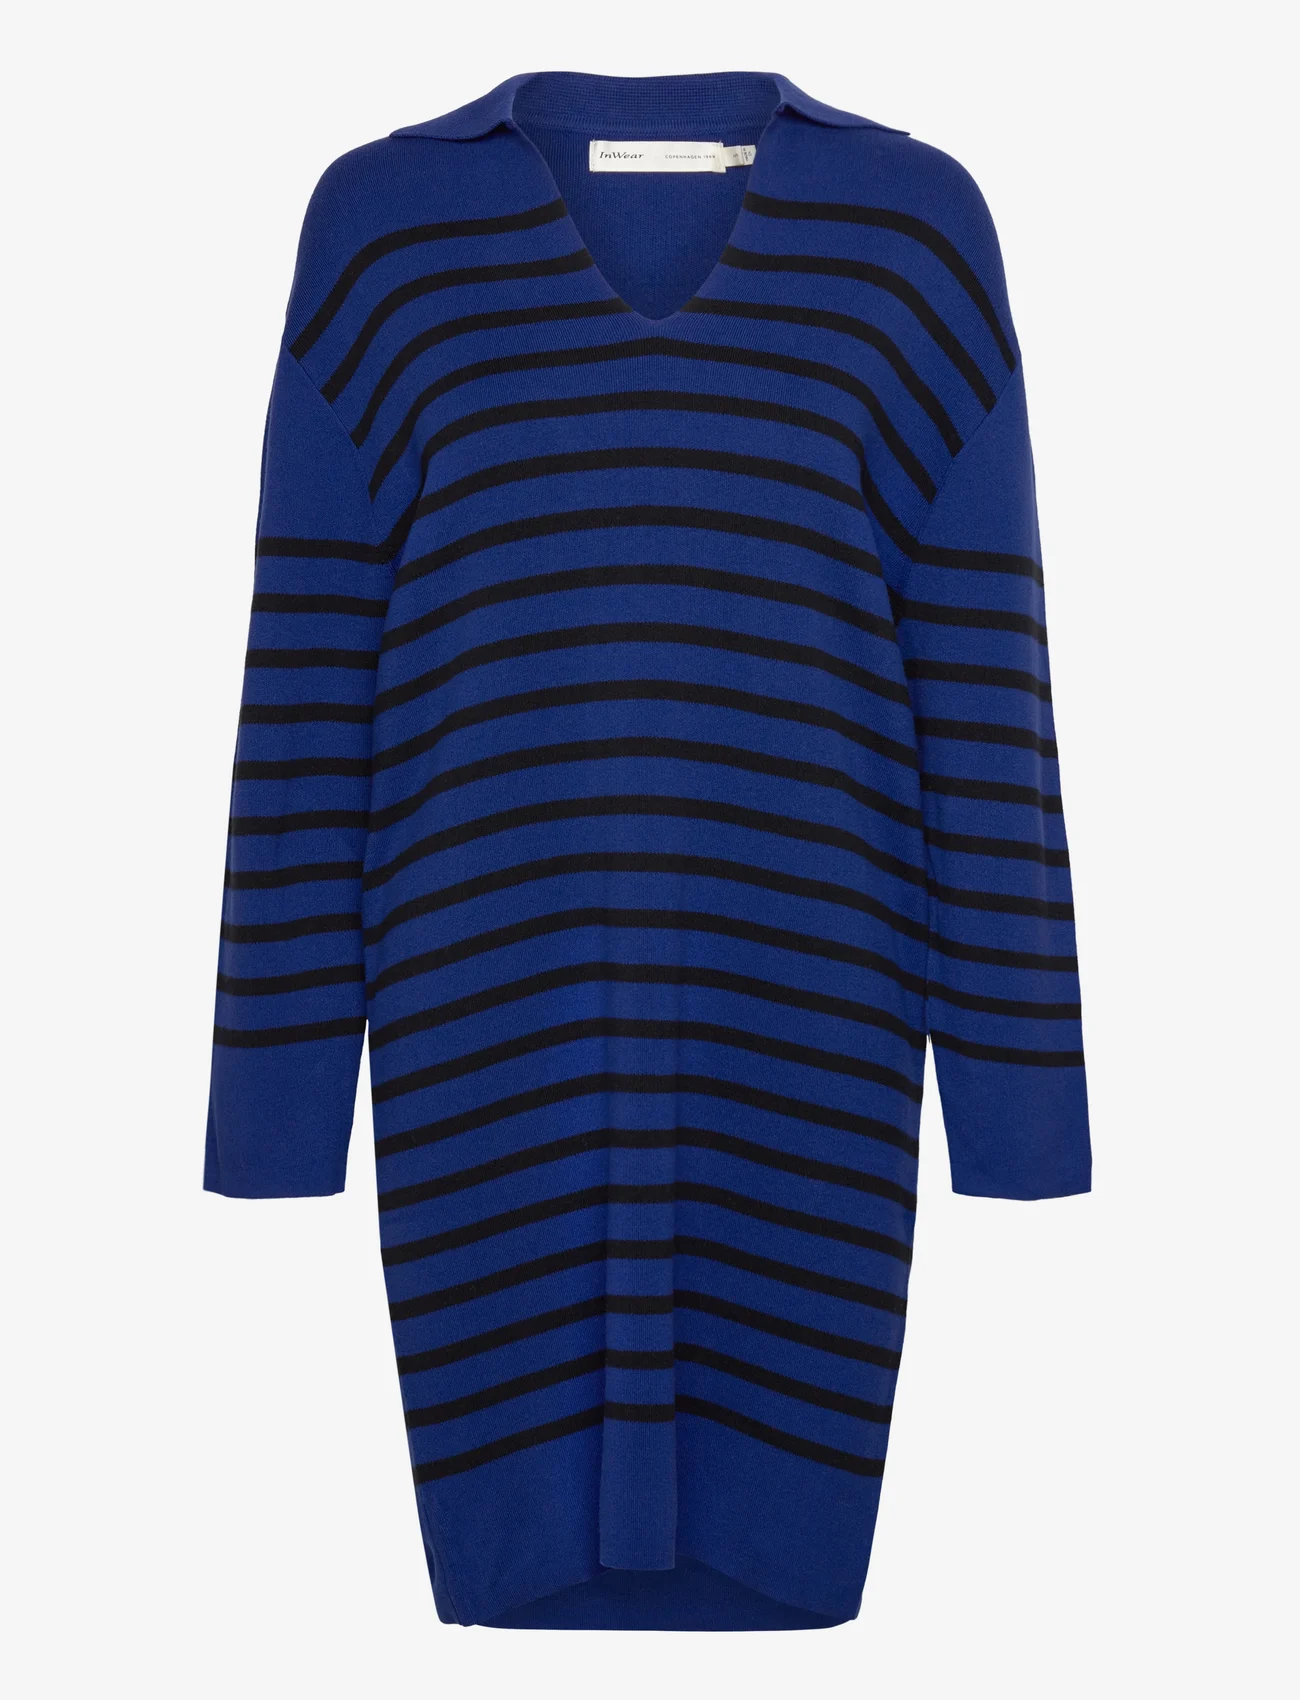 InWear - RopaIW Dress - sukienki dzianinowe - blue / black - 0